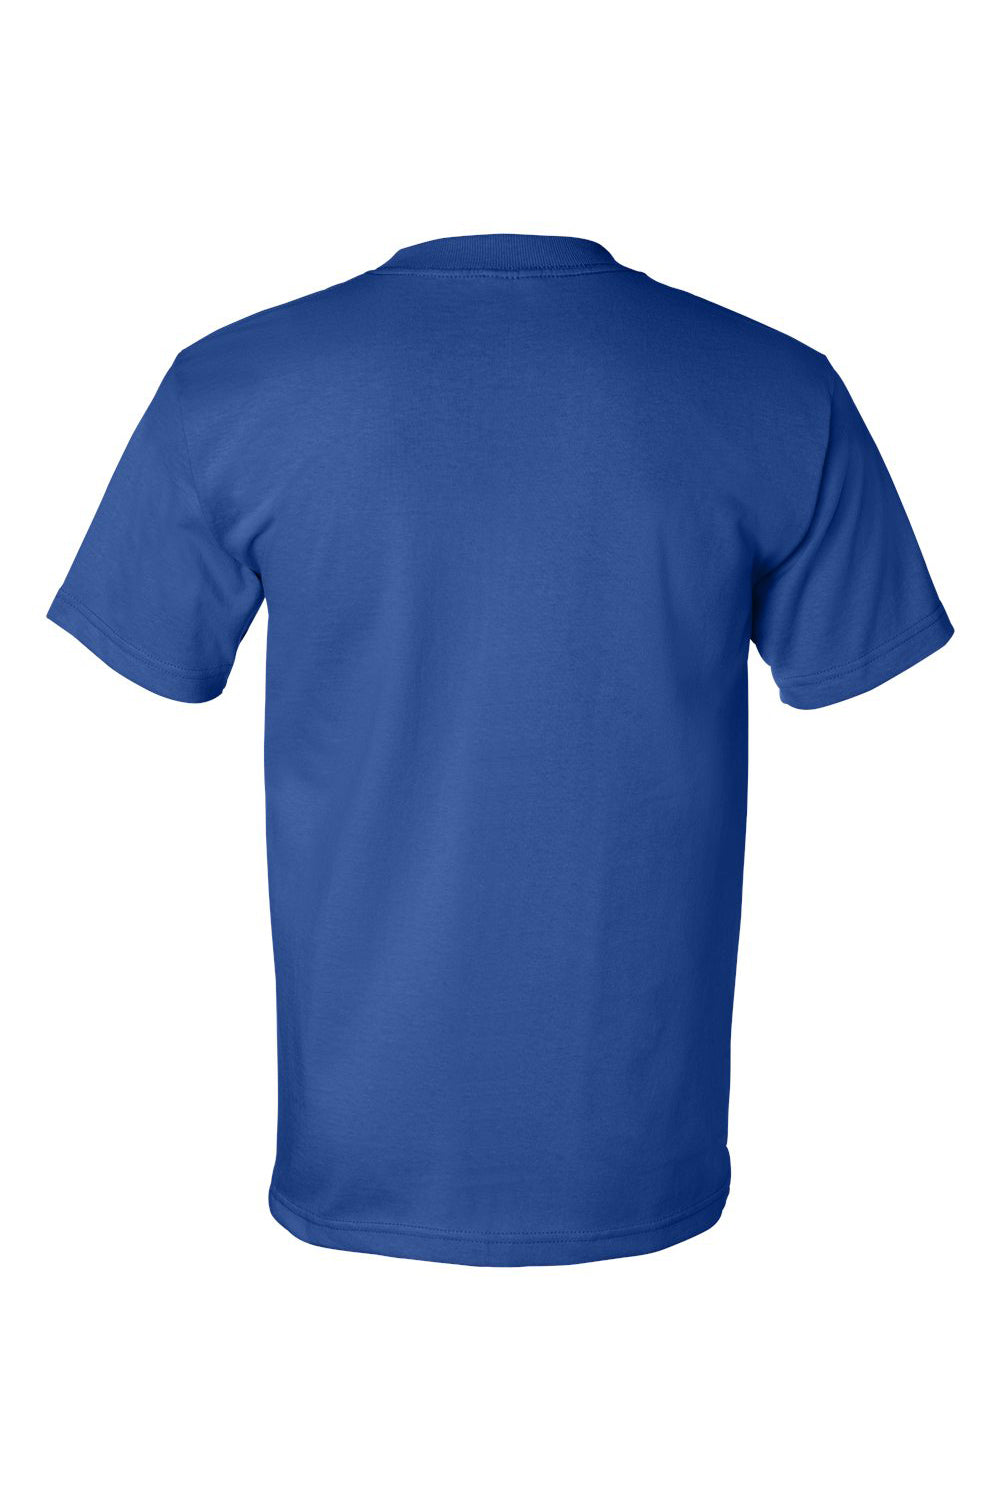 Bayside BA5100 Mens USA Made Short Sleeve Crewneck T-Shirt Royal Blue Flat Back